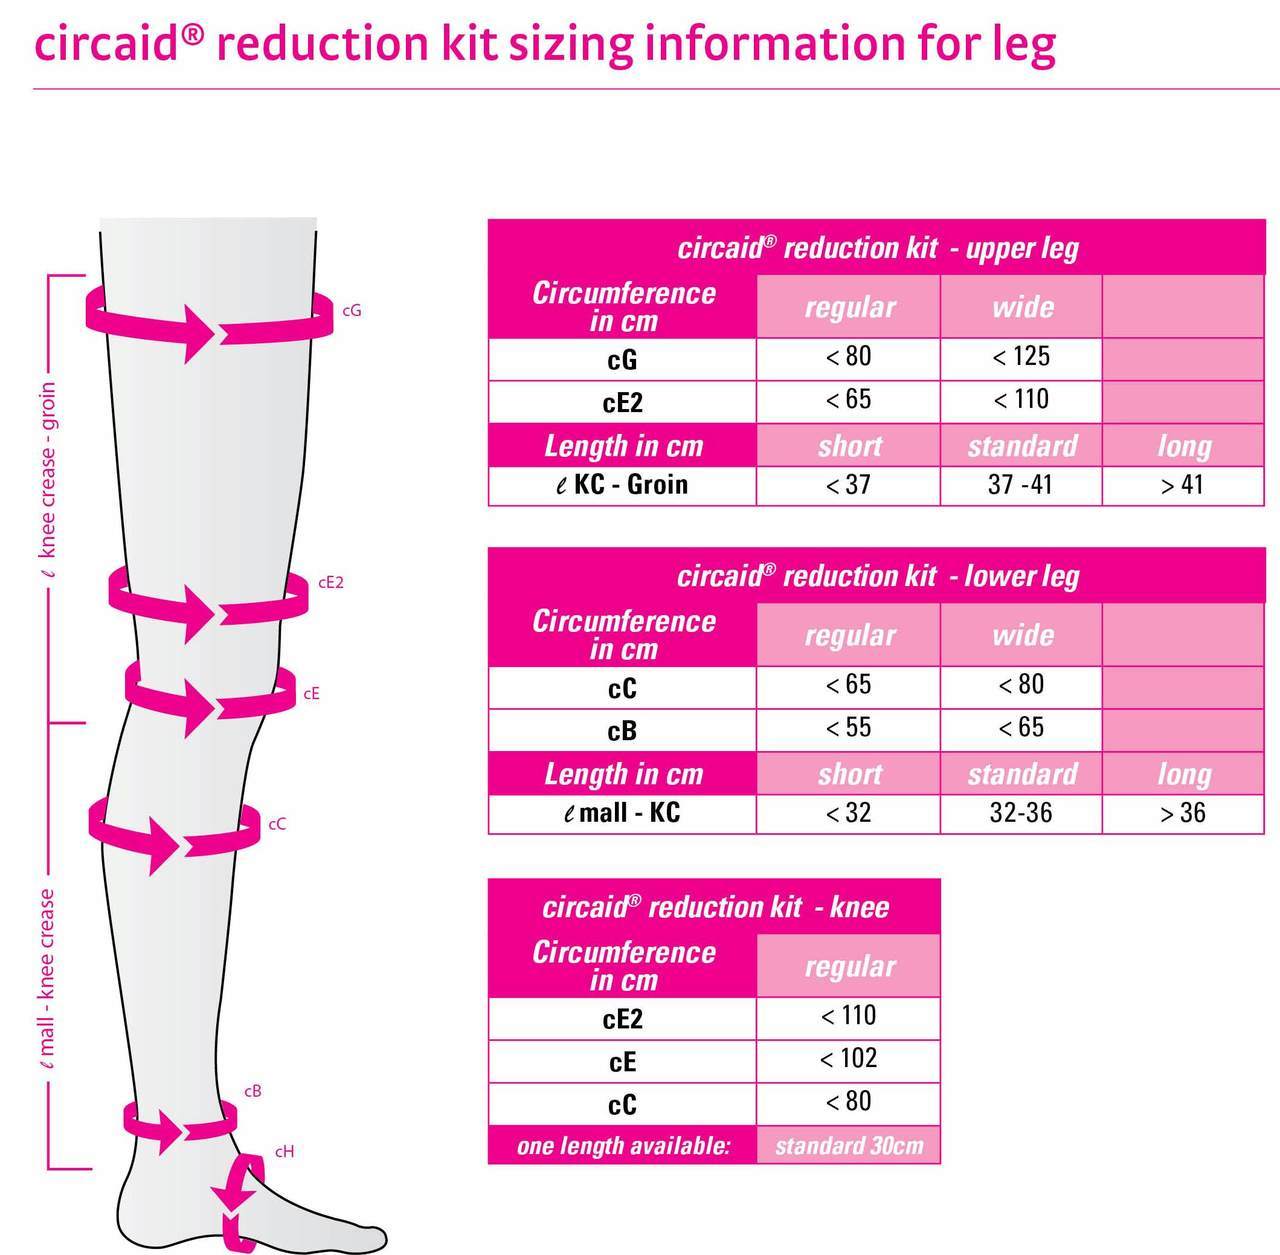 circaid reduction kit lower leg